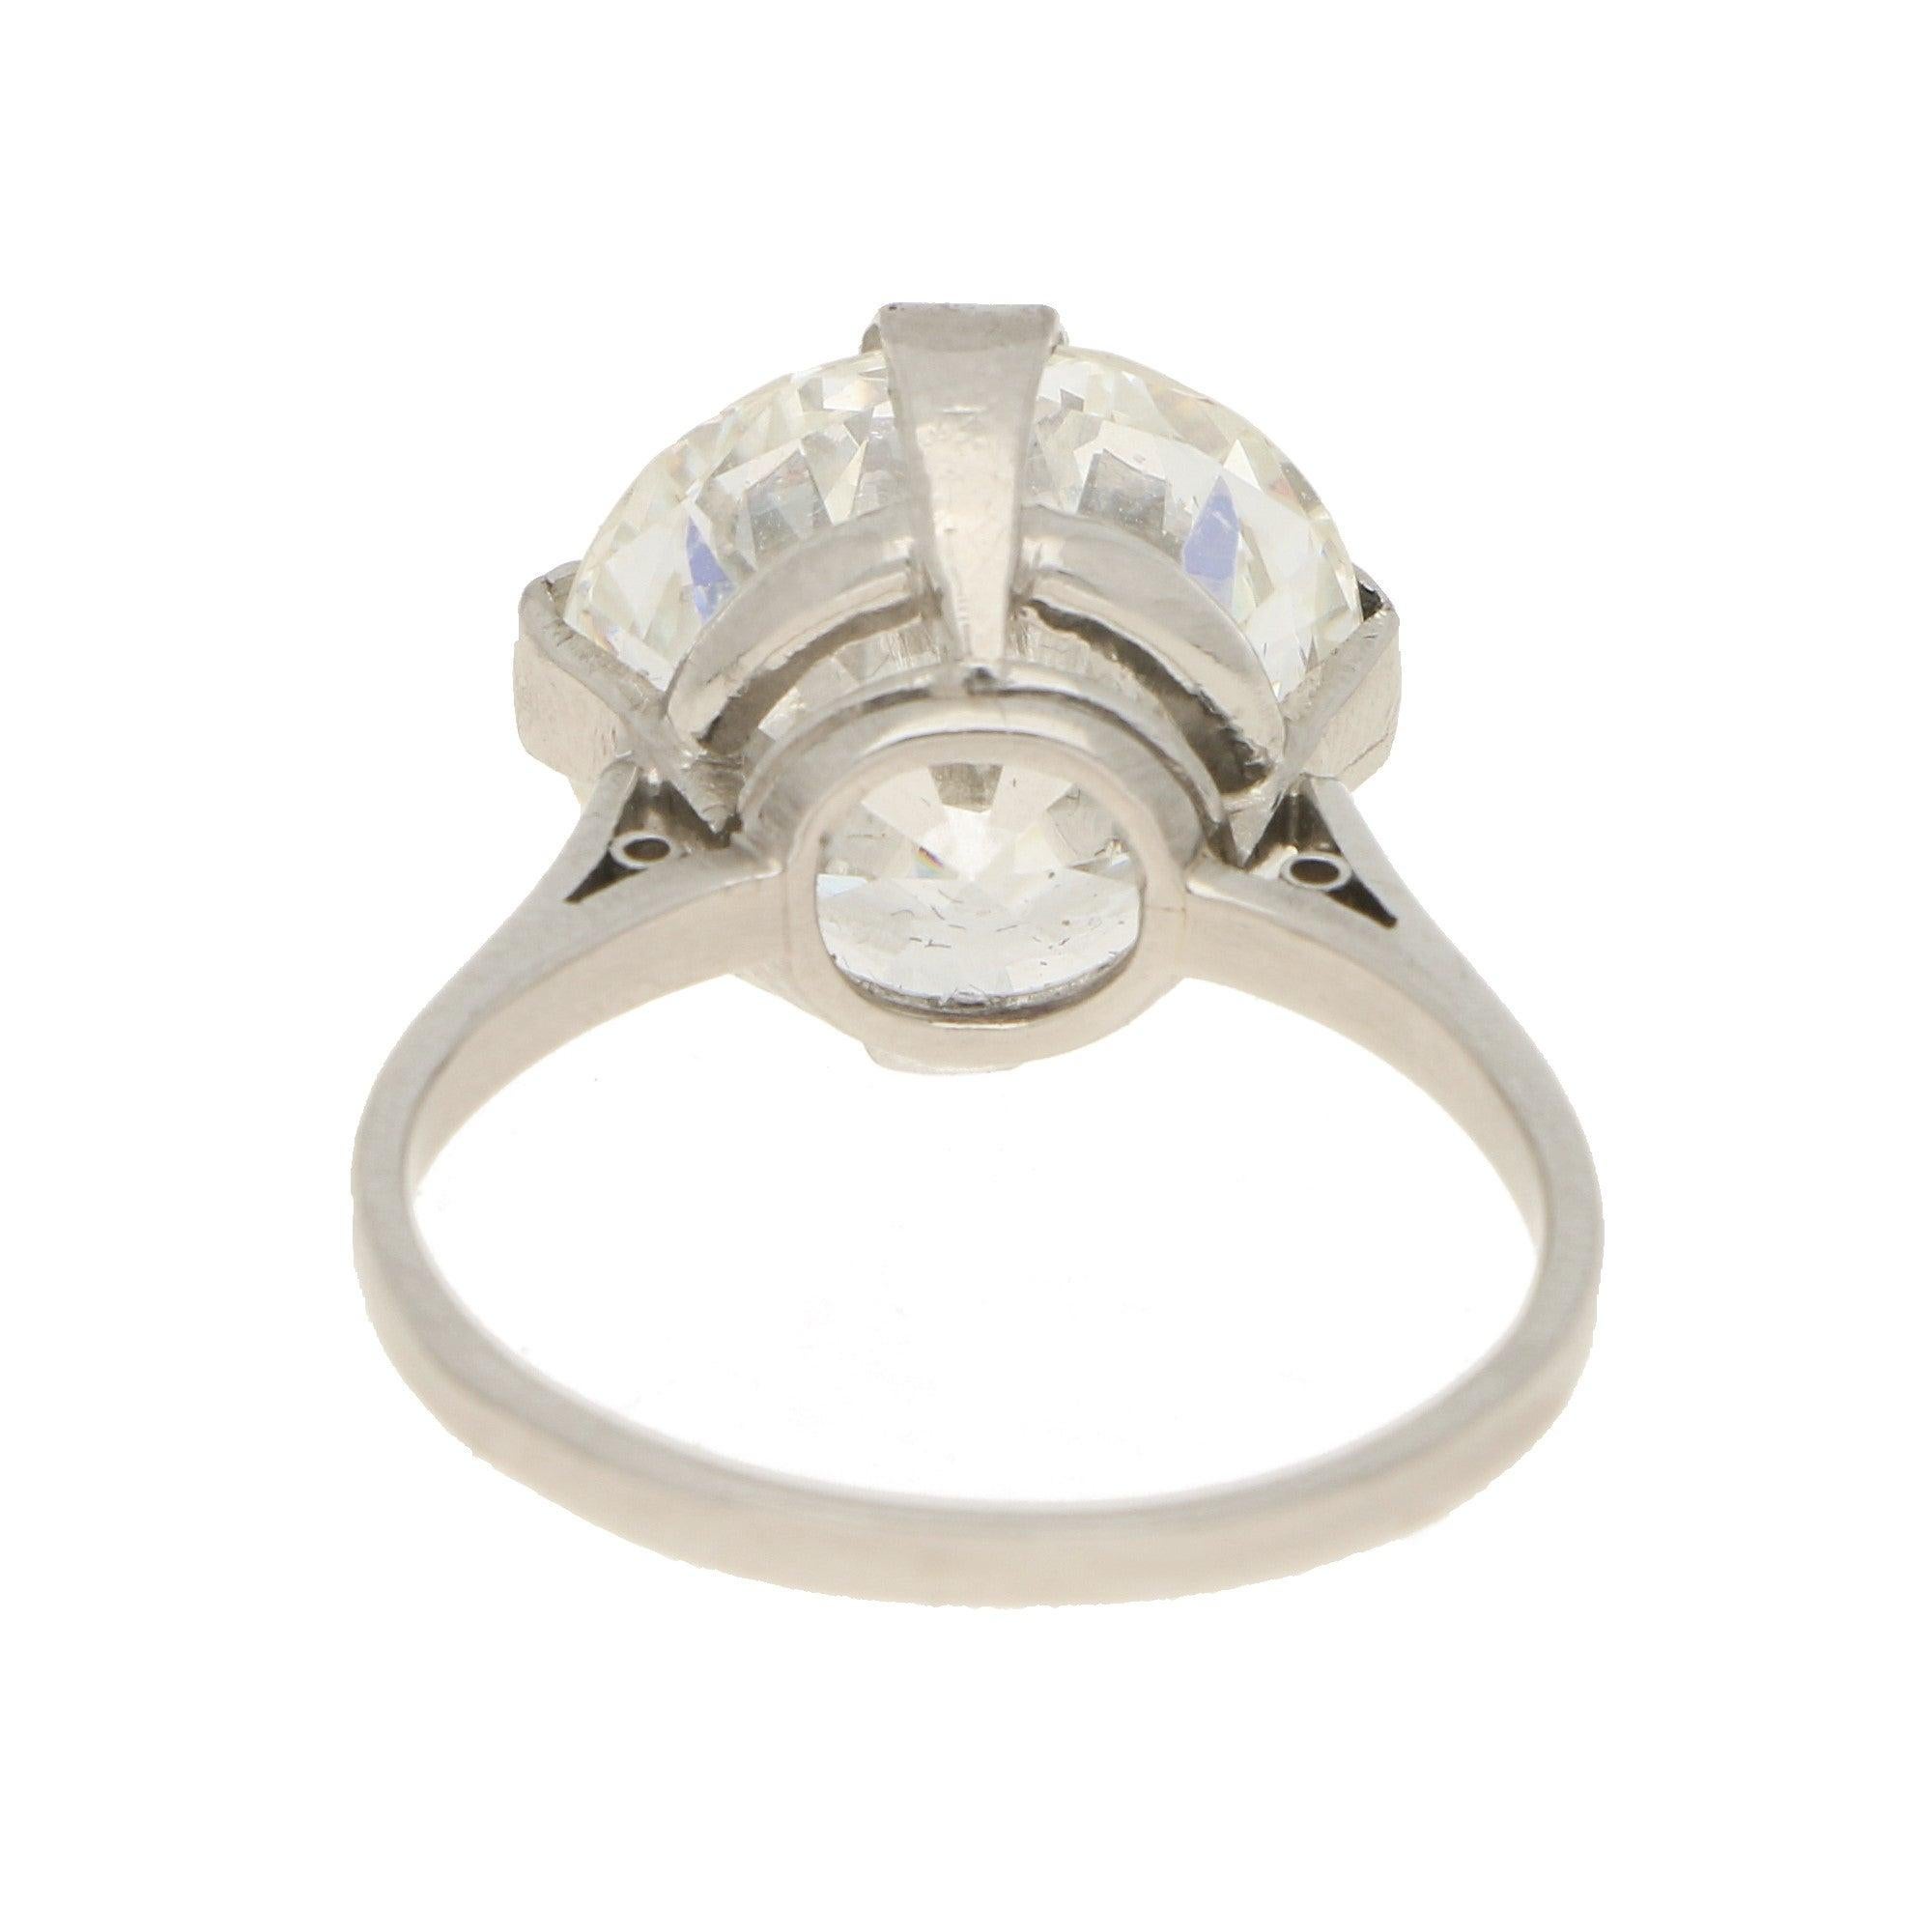 Round Cut Art Deco GIA Certified 7.49 Carat Solitaire Diamond Engagement Ring in Platinum